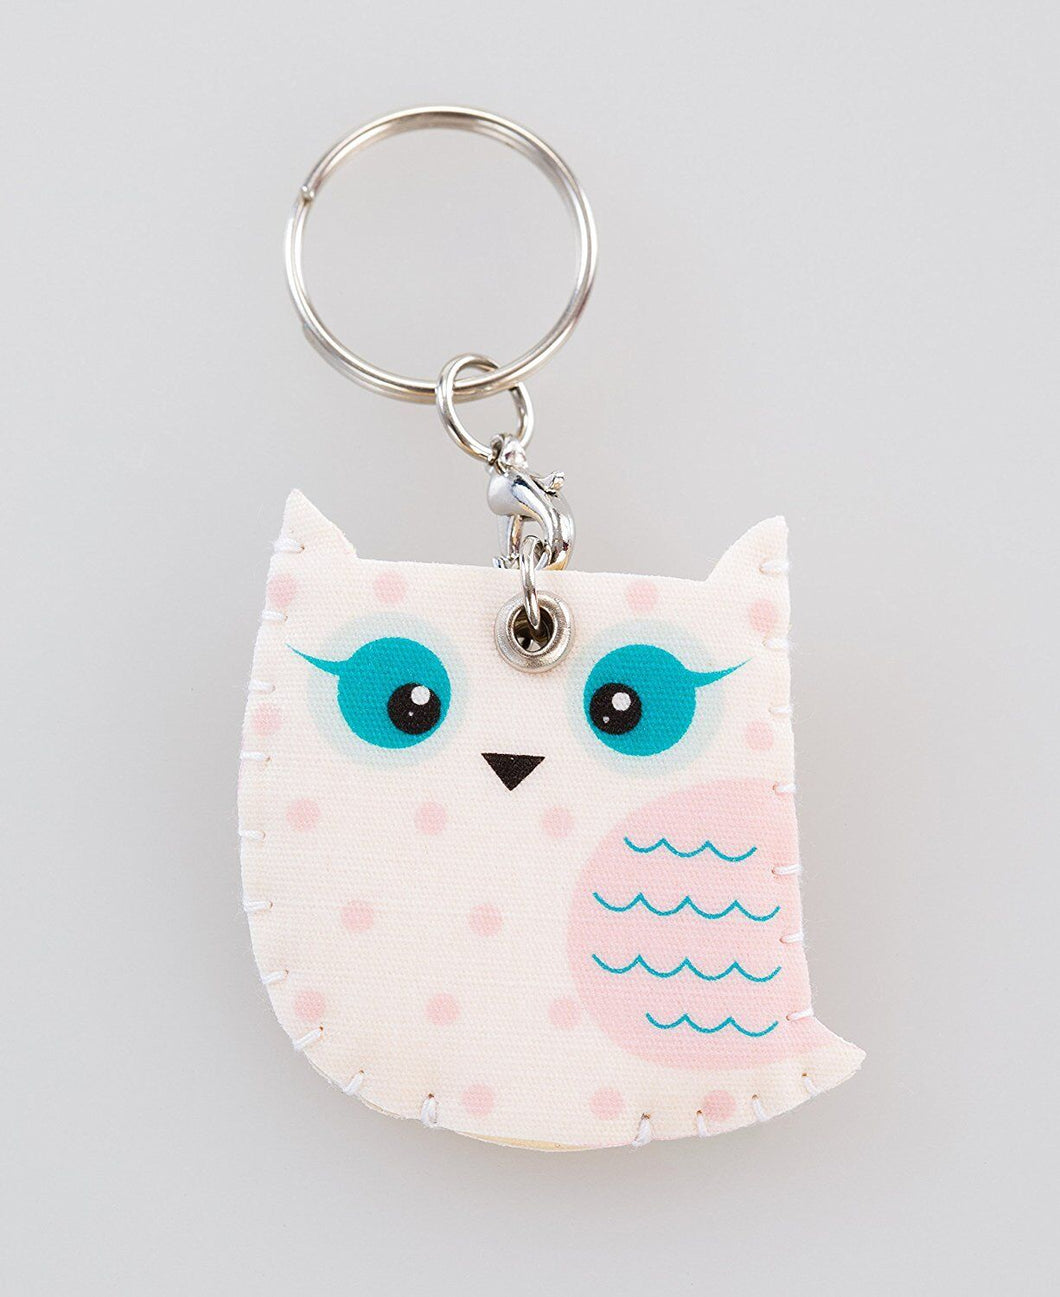 Handmade fabric keyring Owl ideas pattern animal charm lovely pet keychain gifts